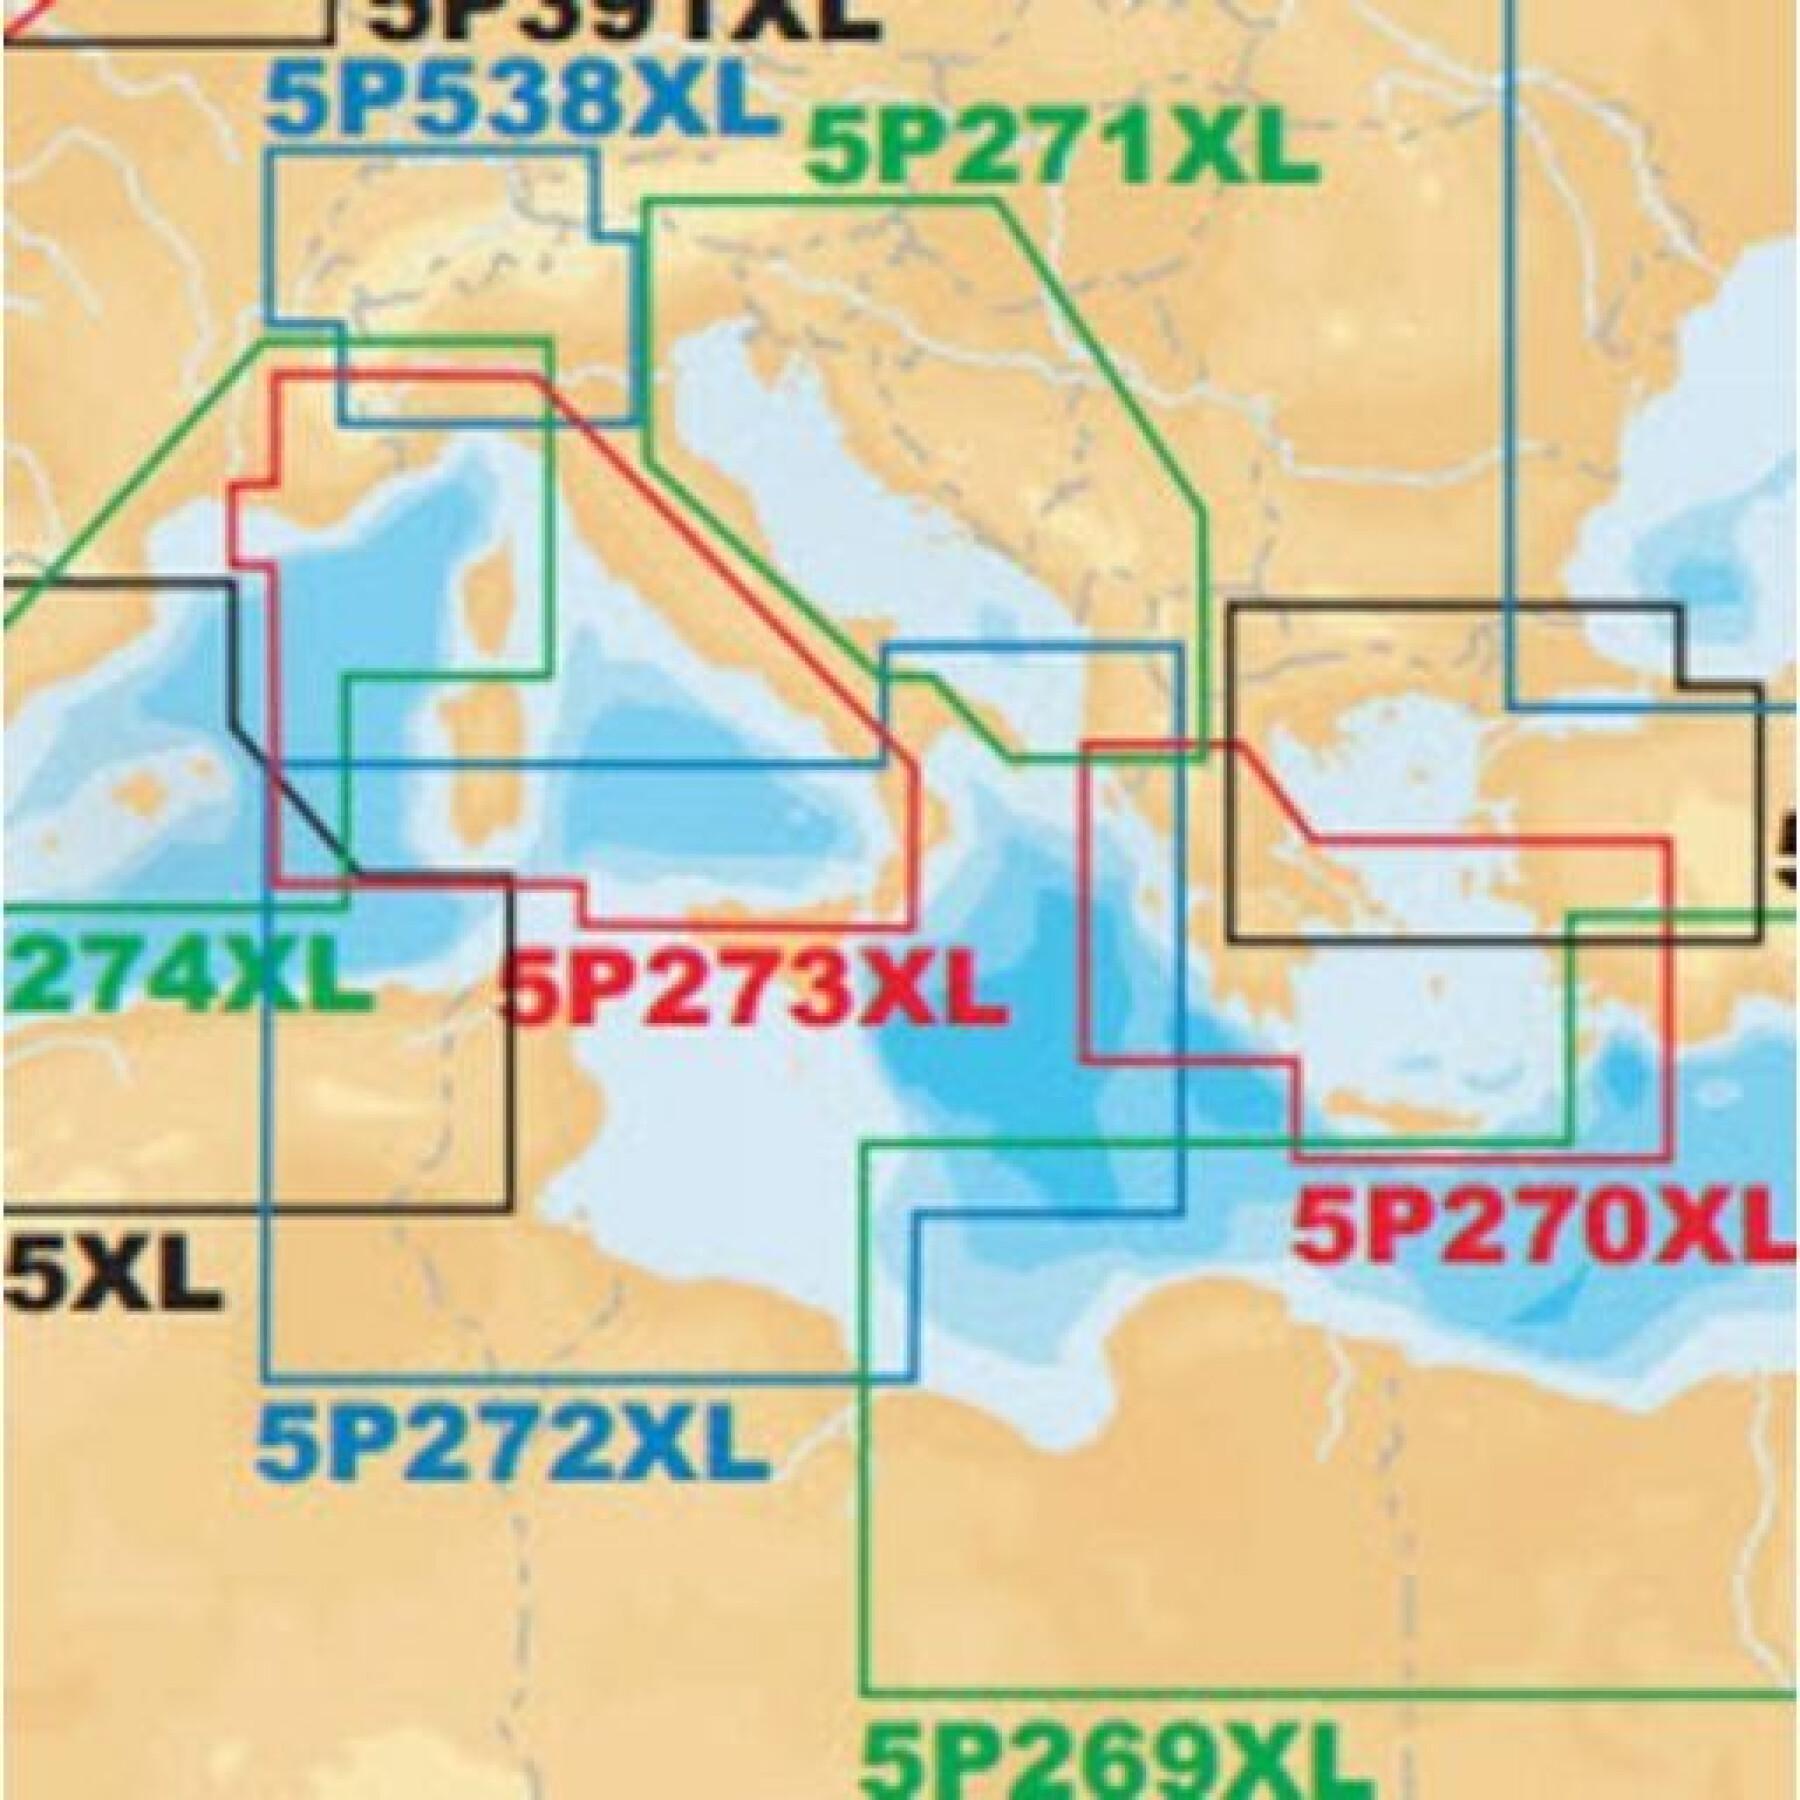 Navigatiekaart sd platinum + xl sd - centrale middellandse zee Navionics